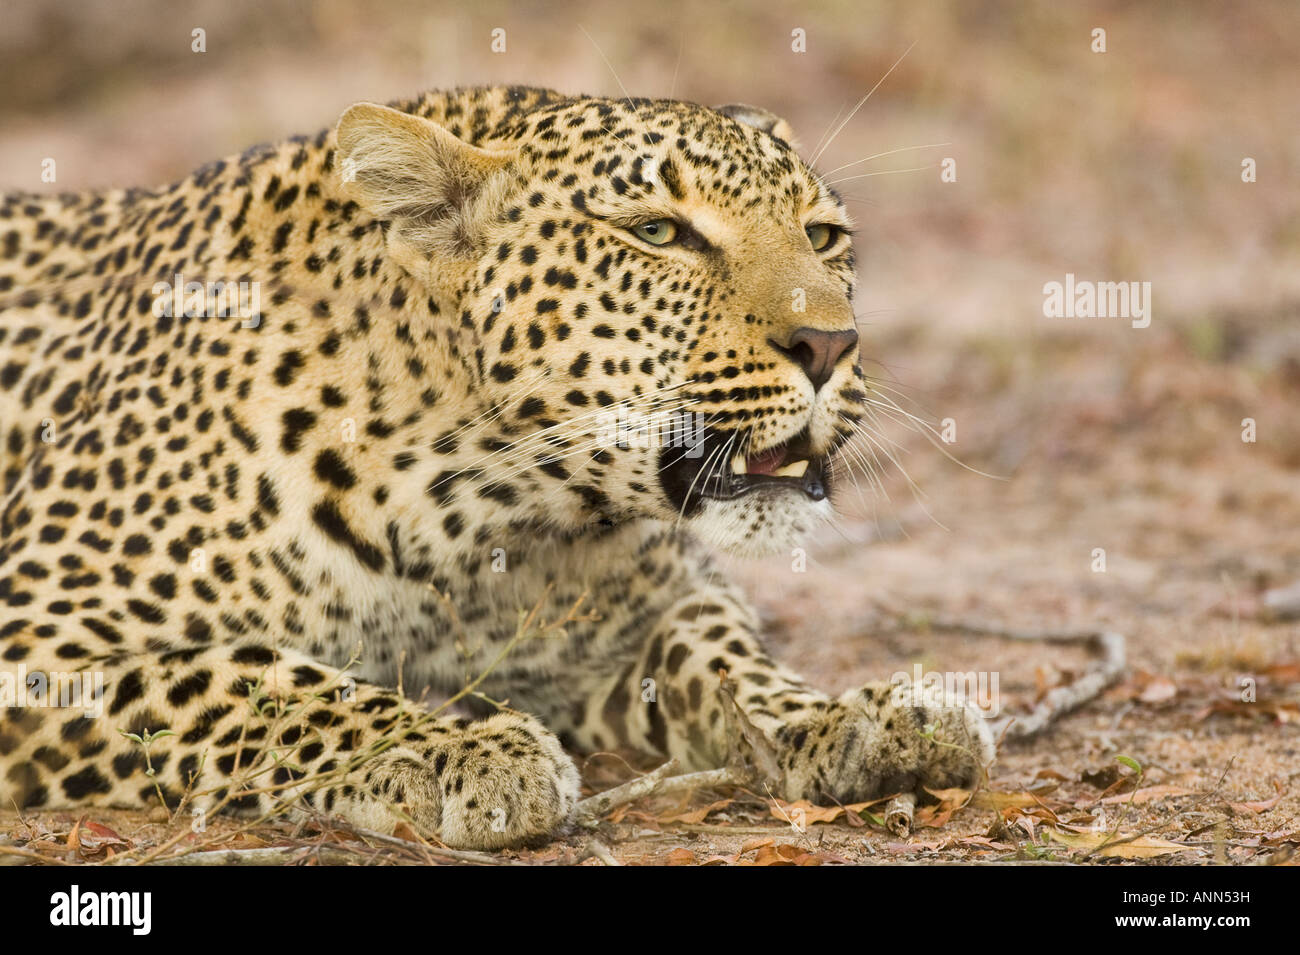 Leopard Verlegung auf Boden, Greater Kruger National Park, Südafrika Stockfoto